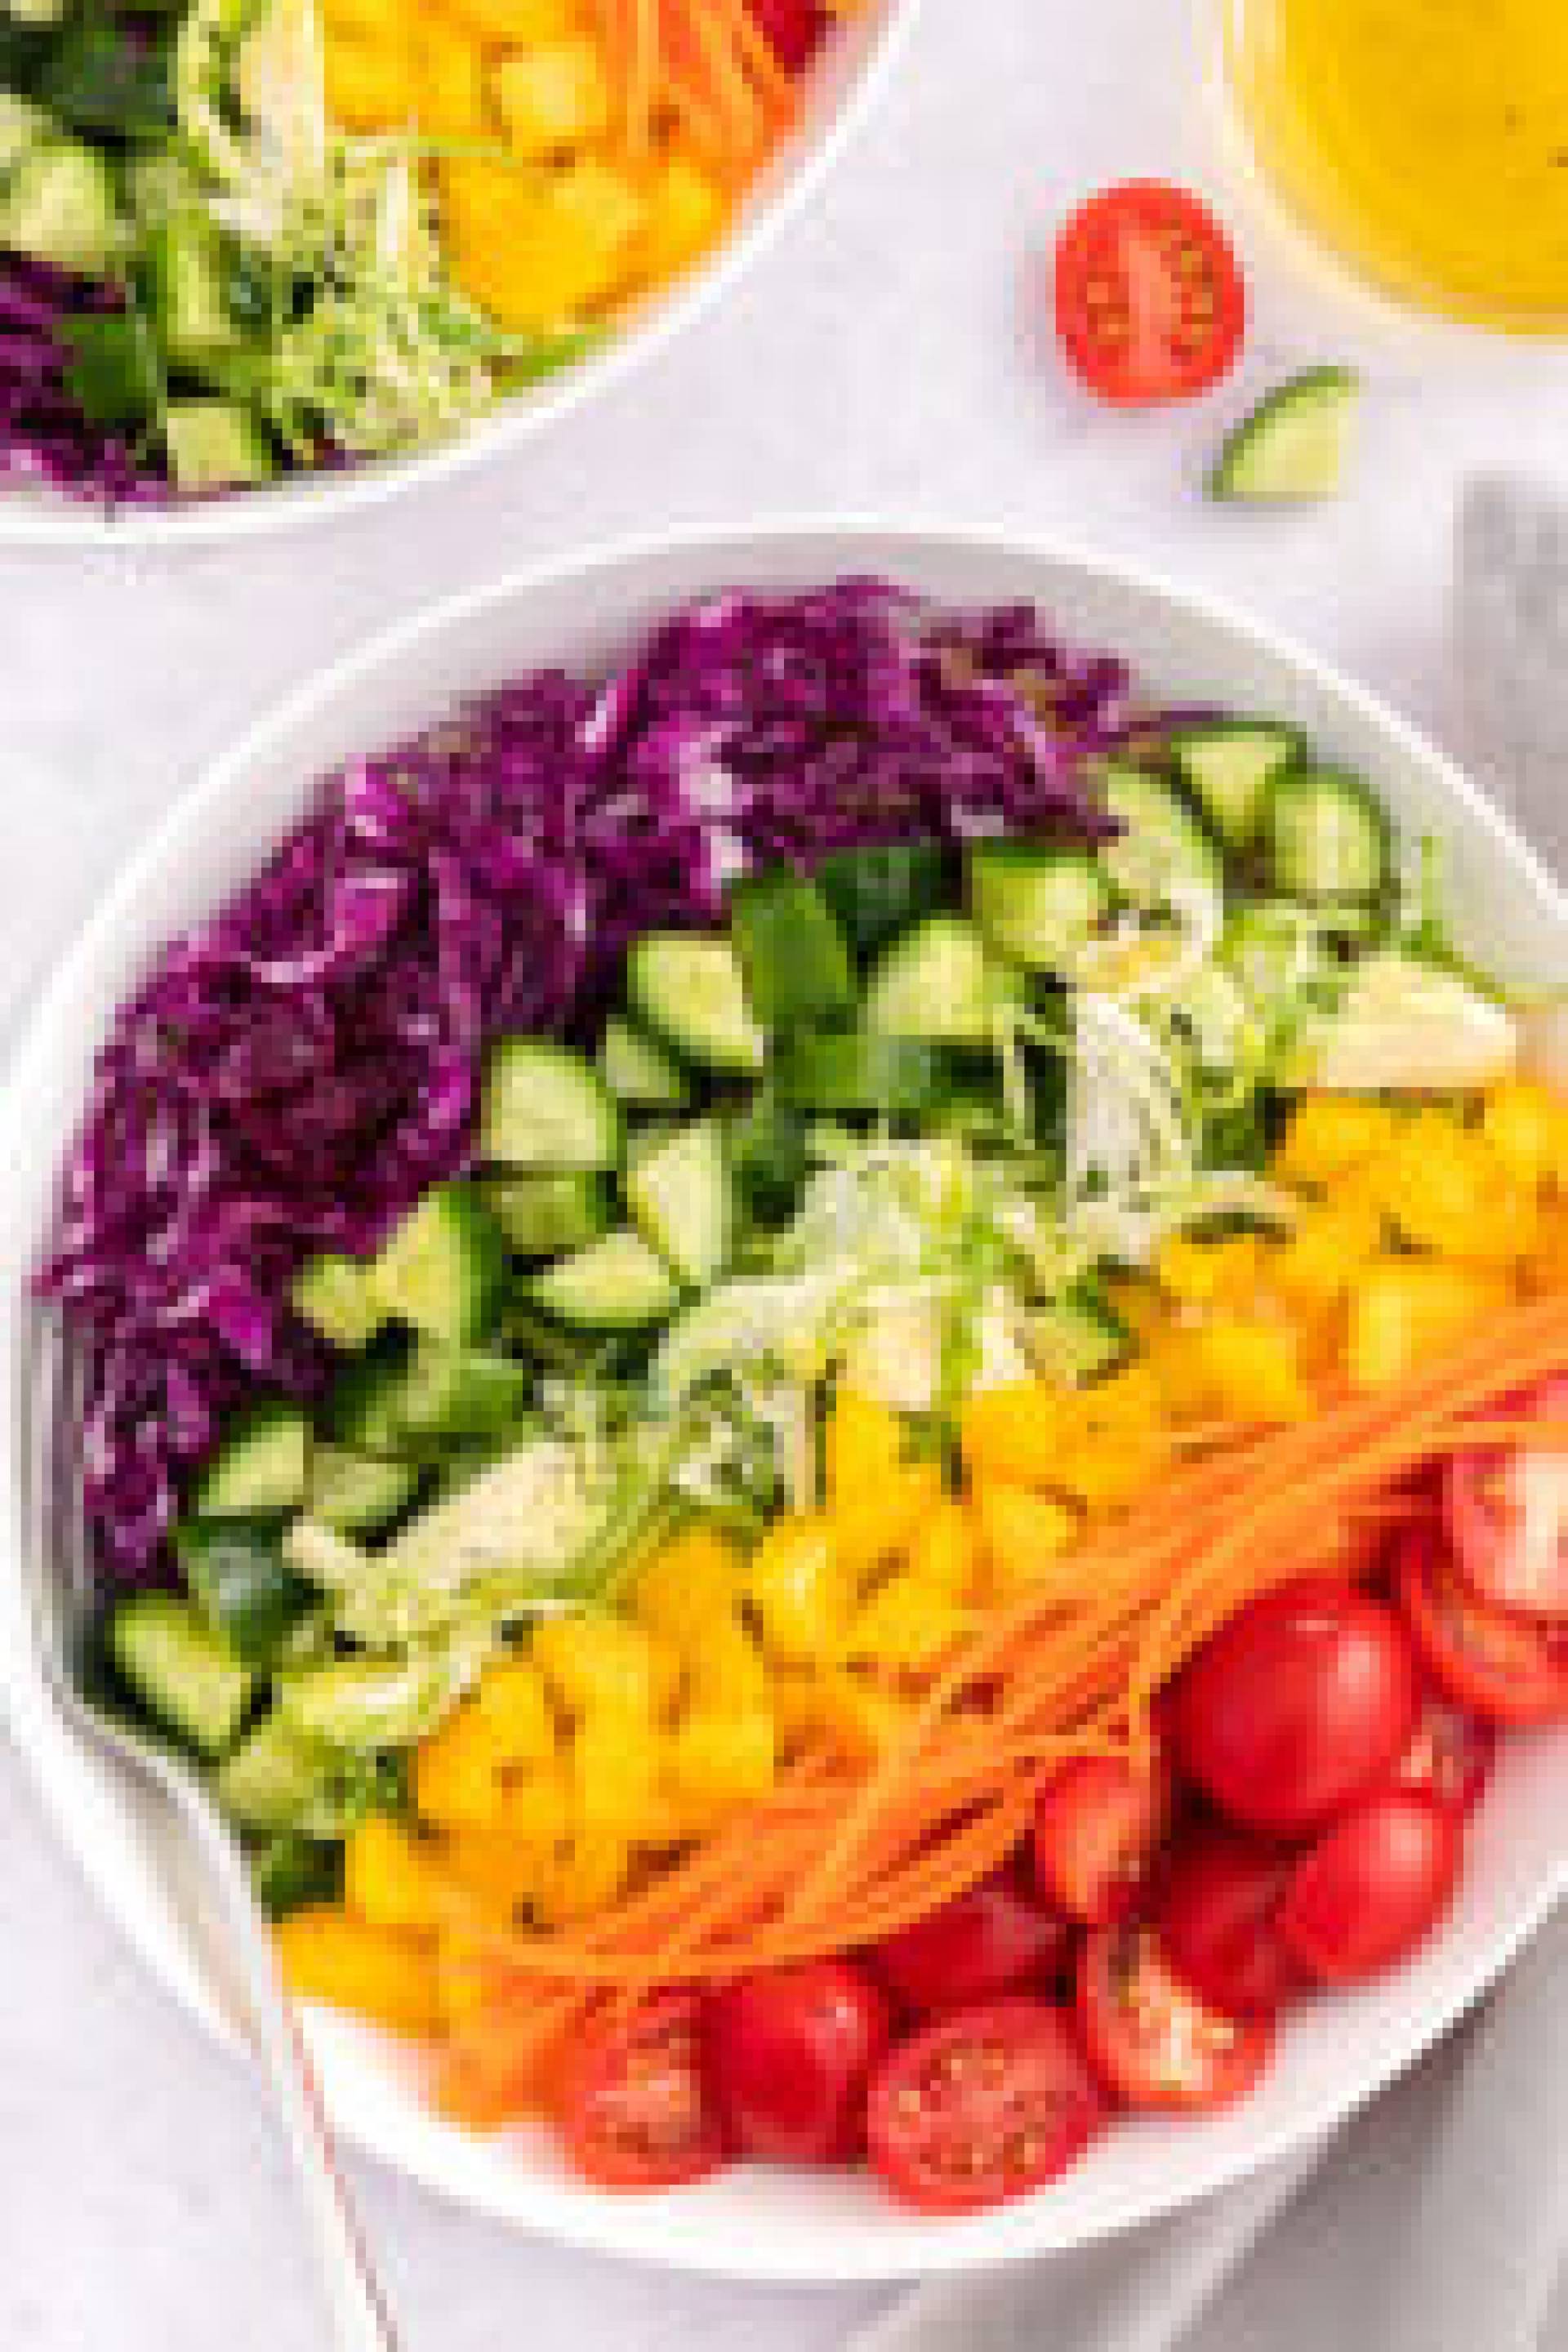 Rainbow Quinoa Salad with Lemon Dressing